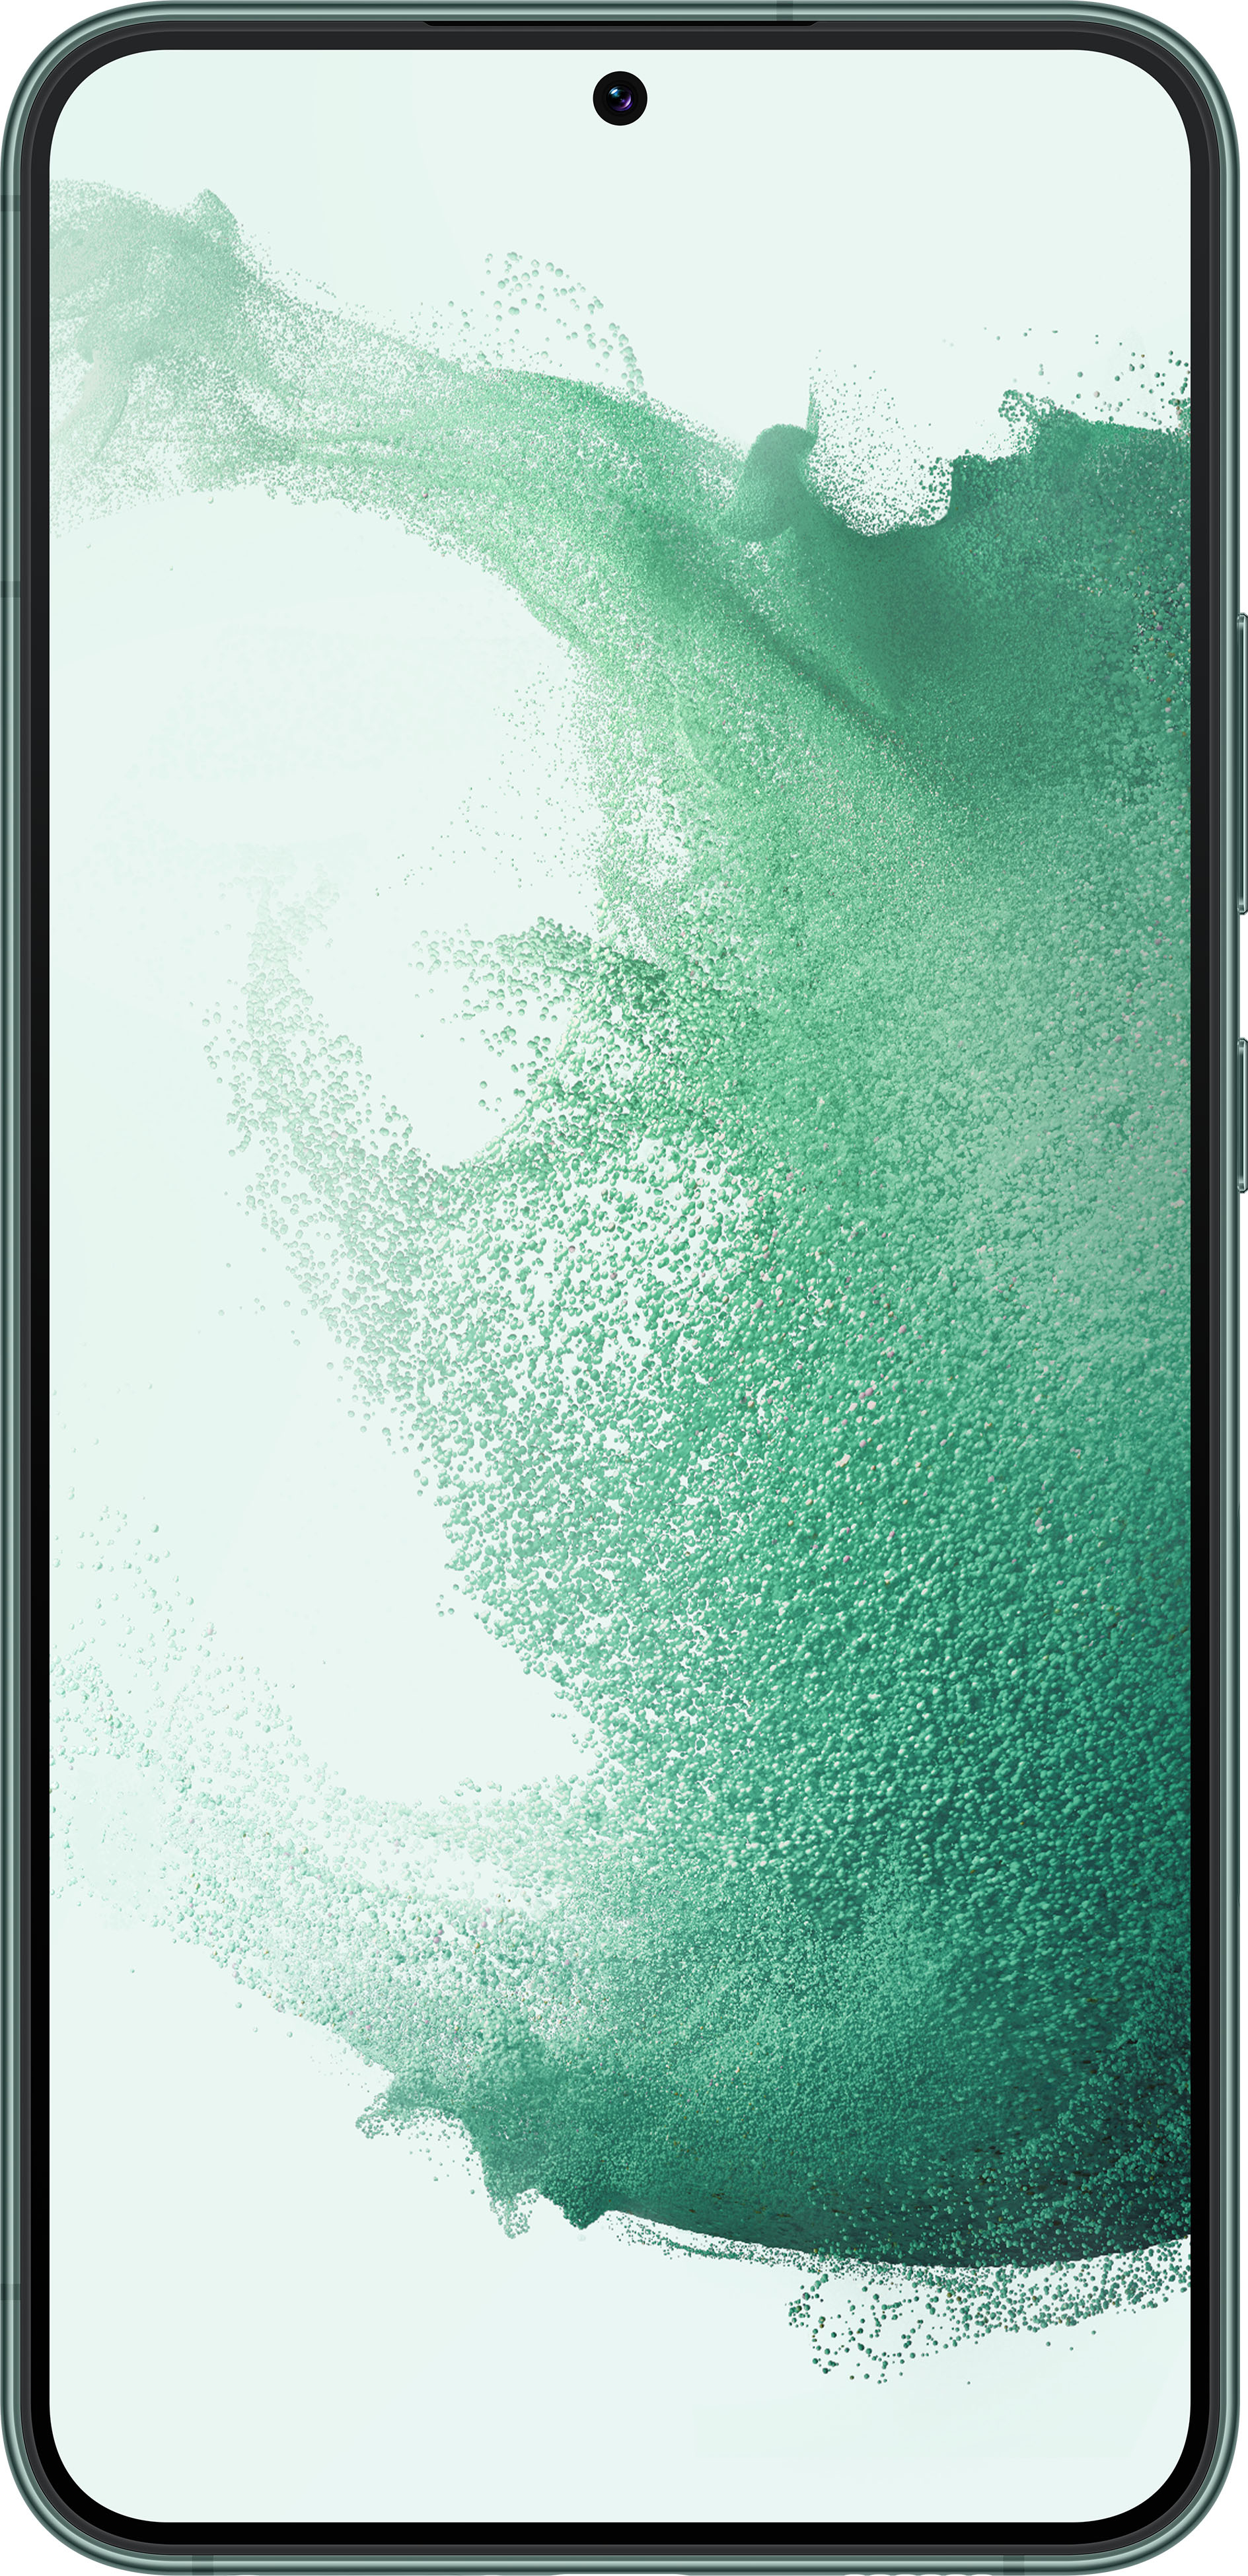 Samsung Galaxy S22 Plus 128 GB Verde